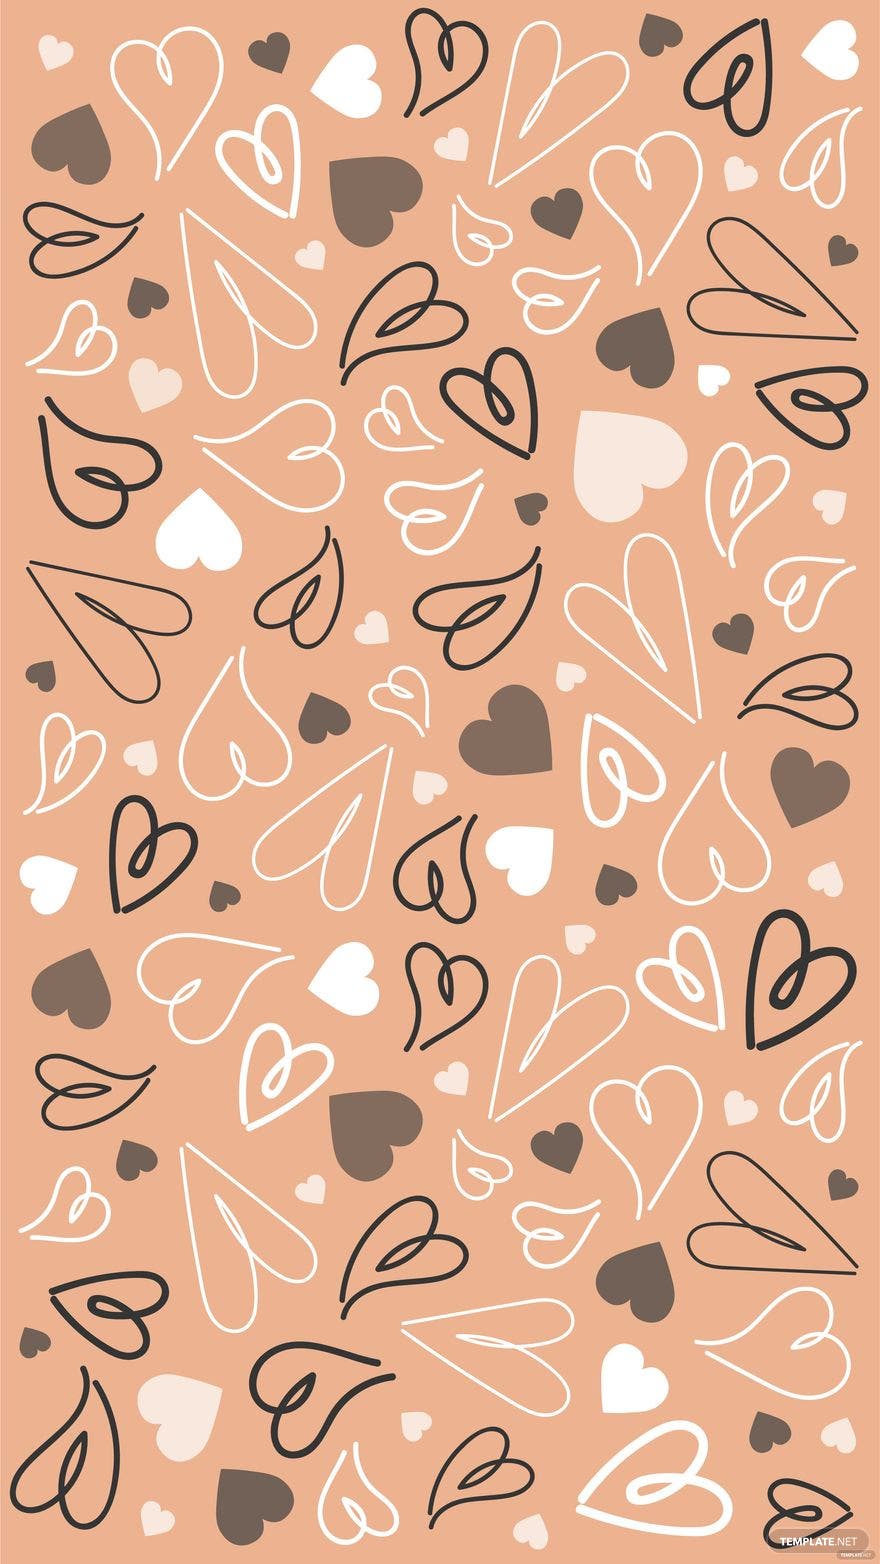 A pattern of hearts on an orange background - Black heart